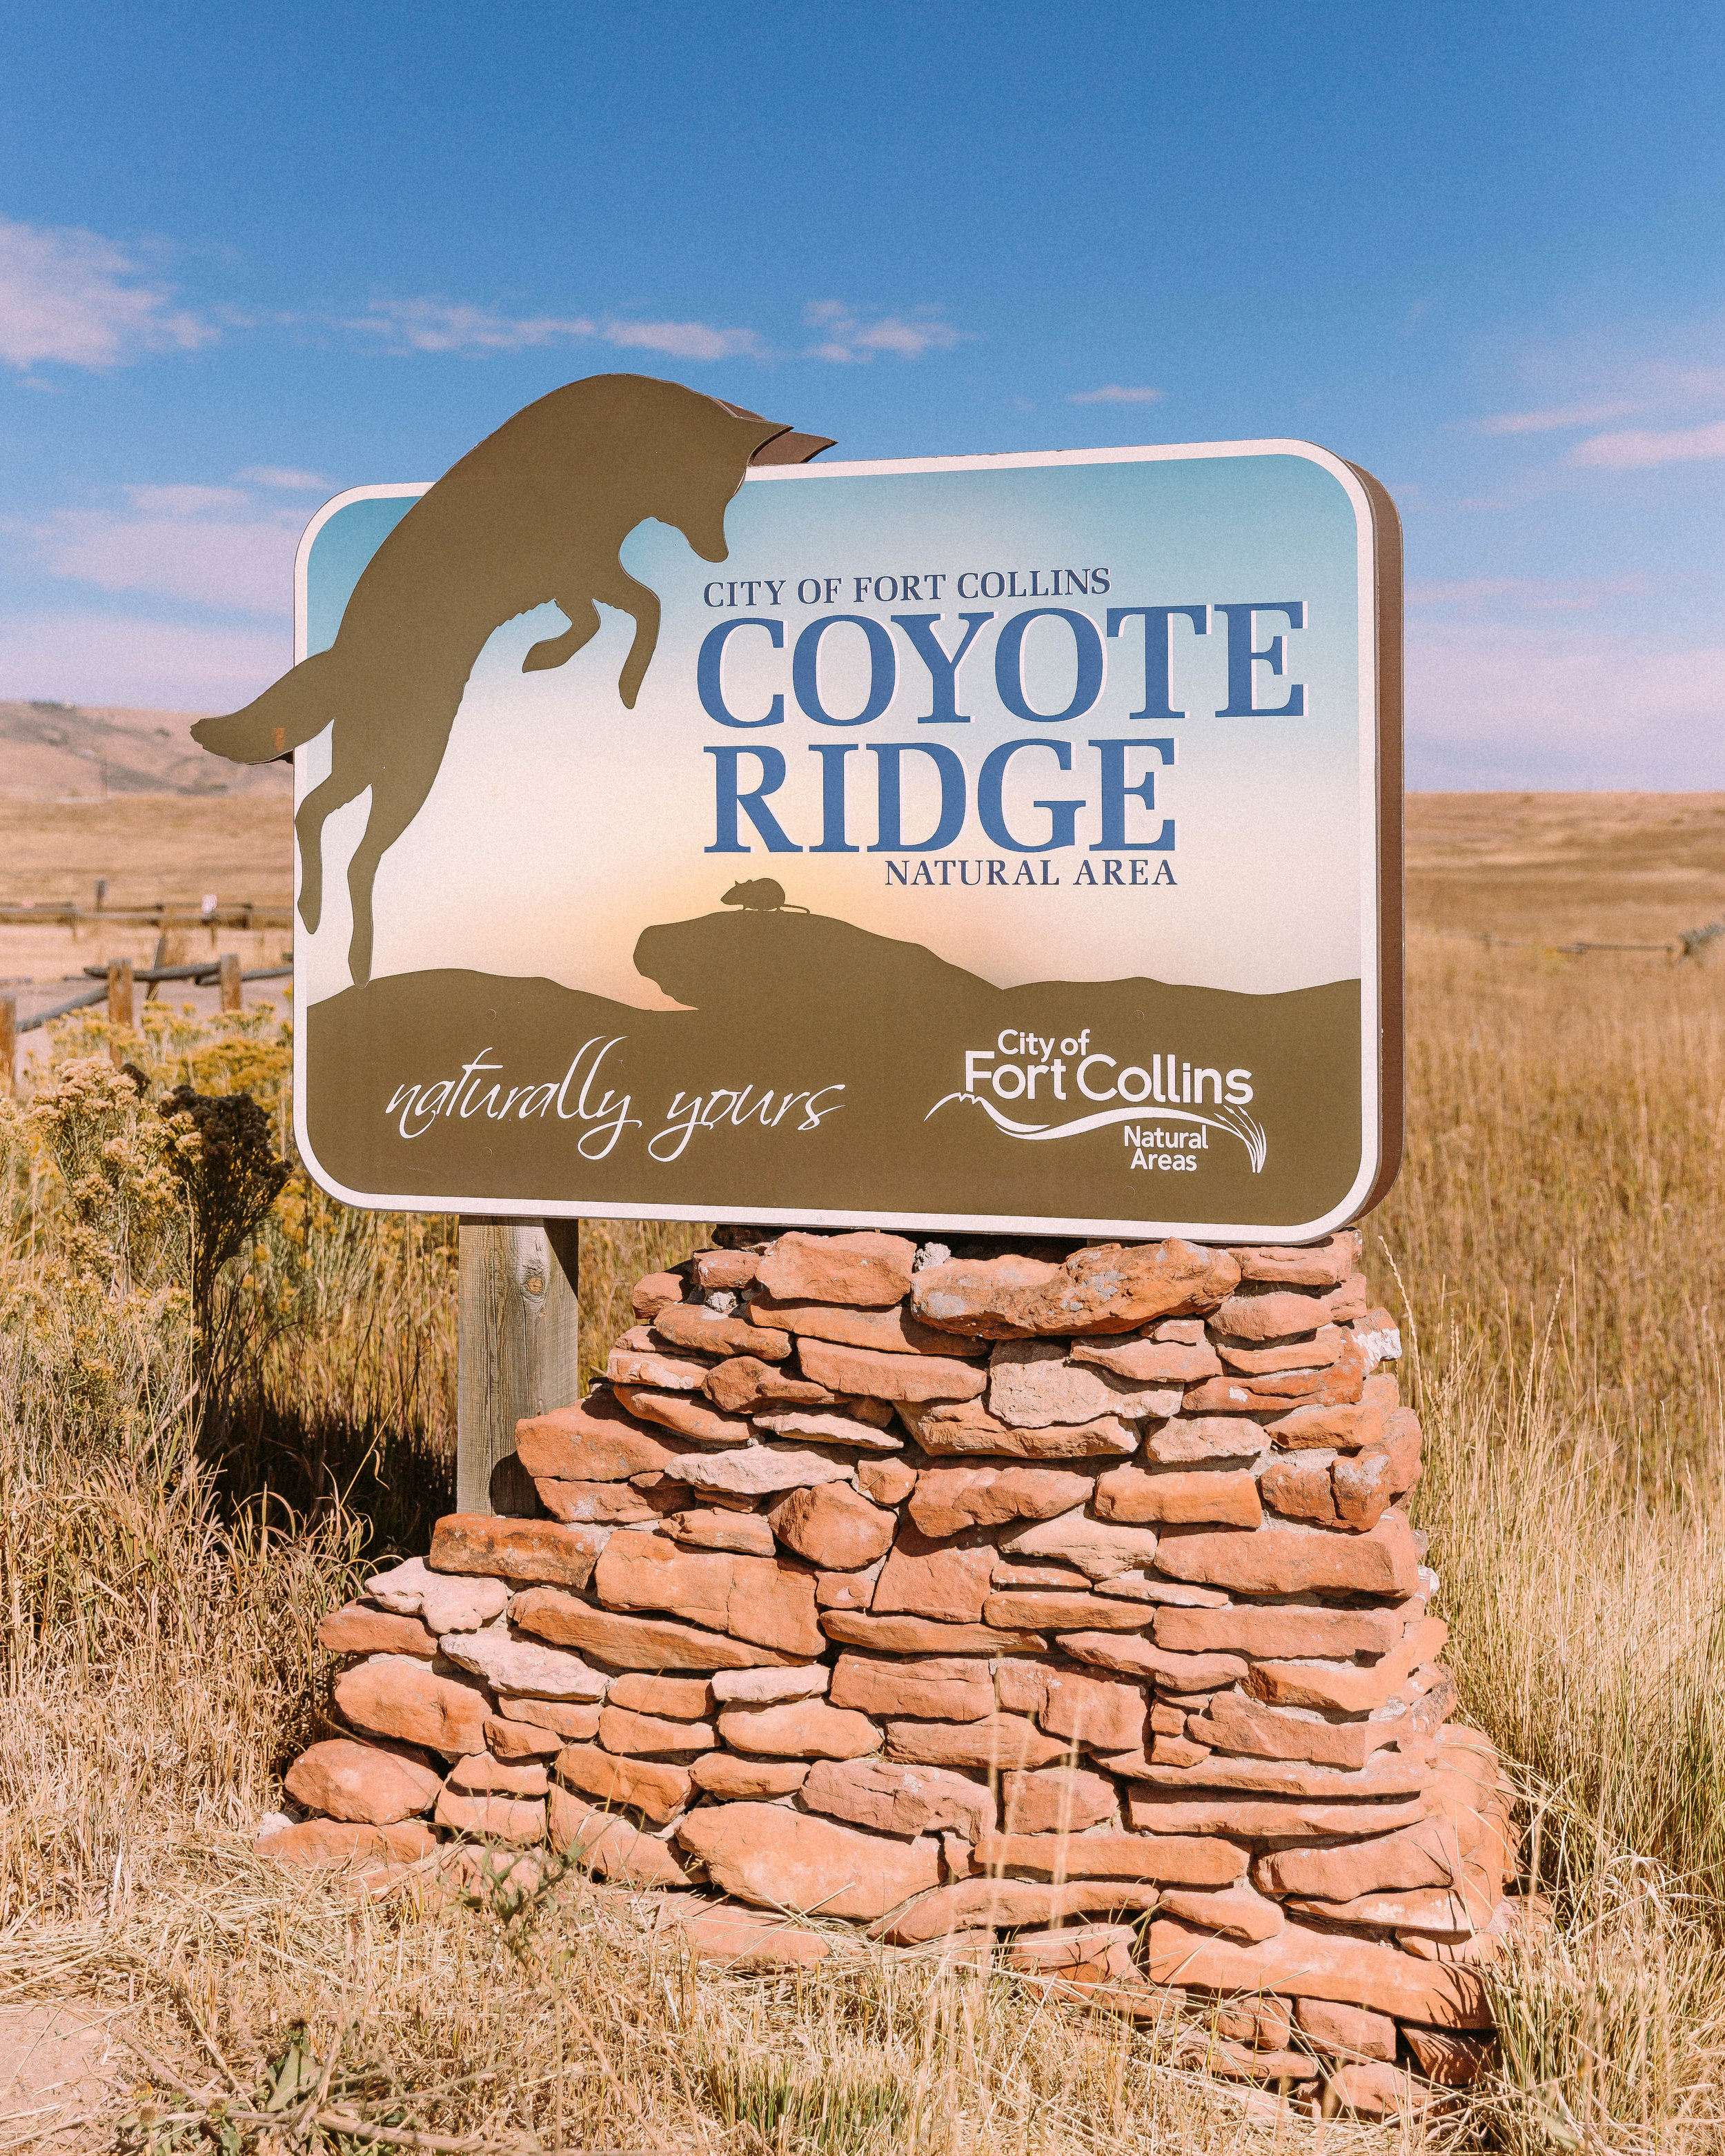 Coyote Ridge near Fort Collins, CO